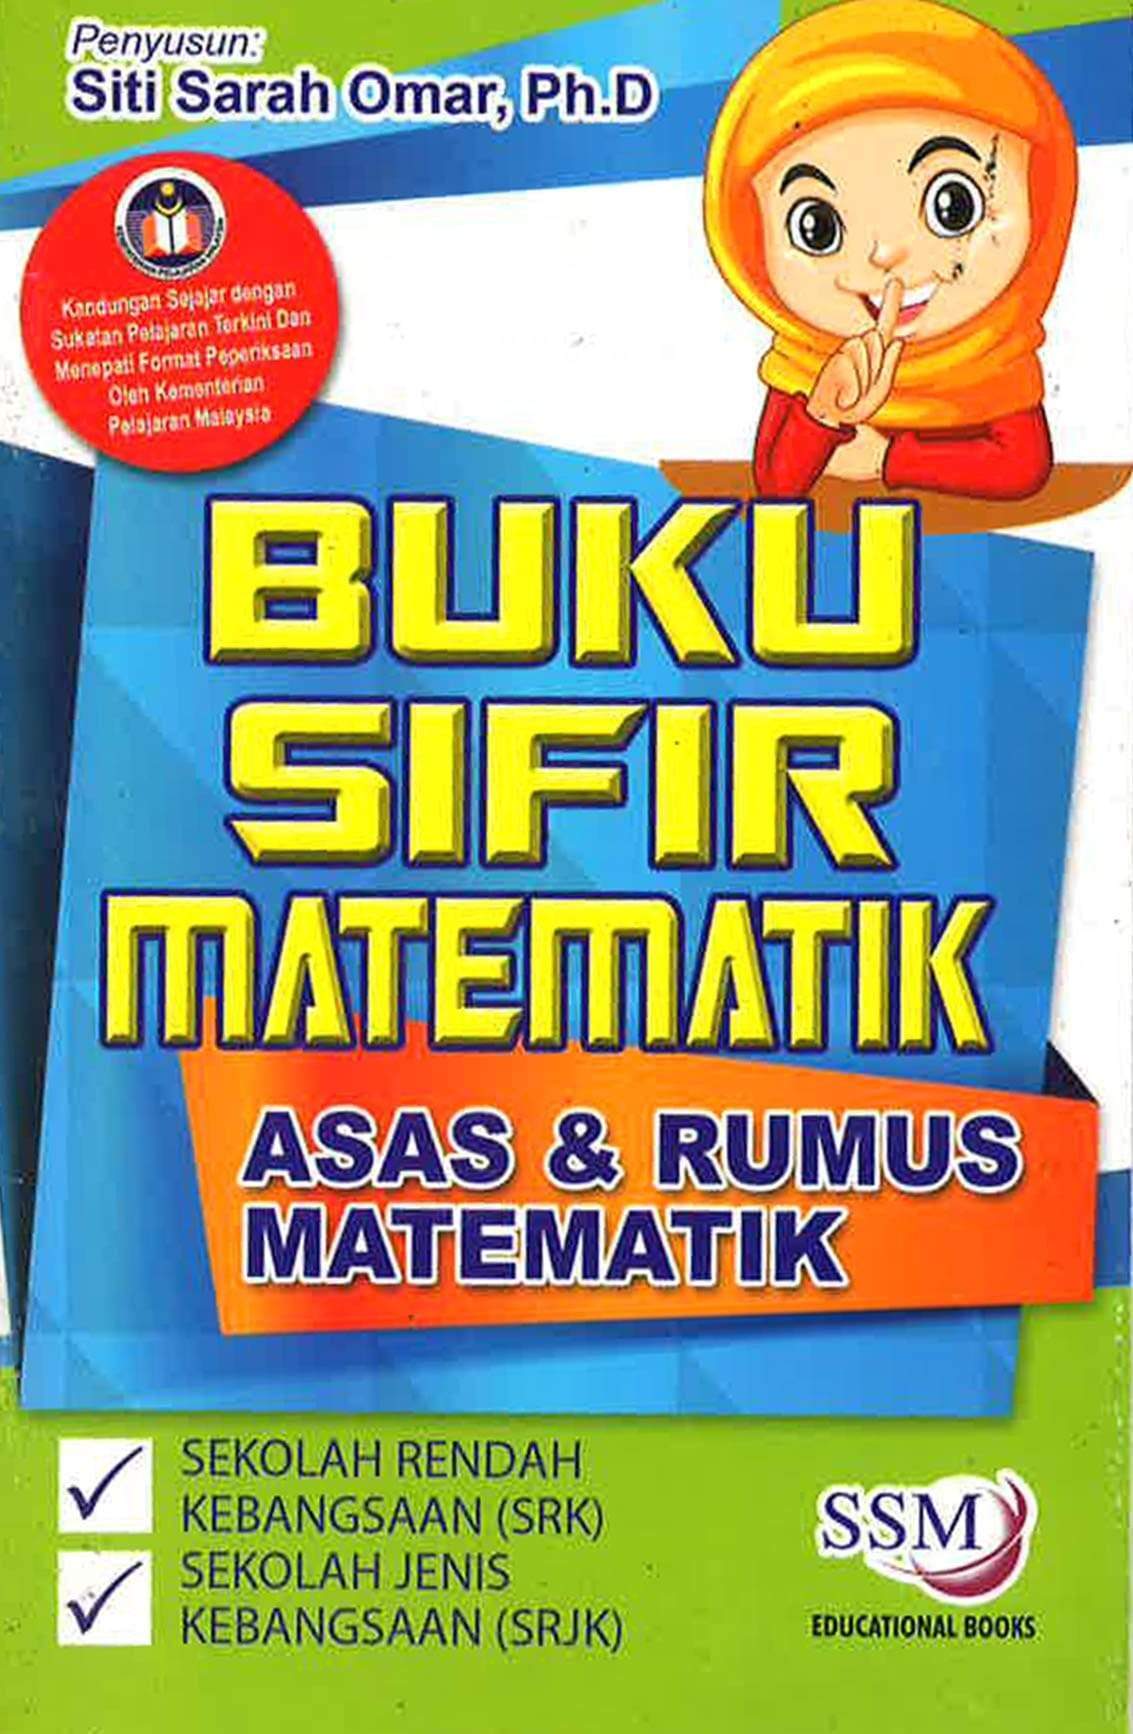 Buku Sifir Matematik Asas & Rumus Matematik